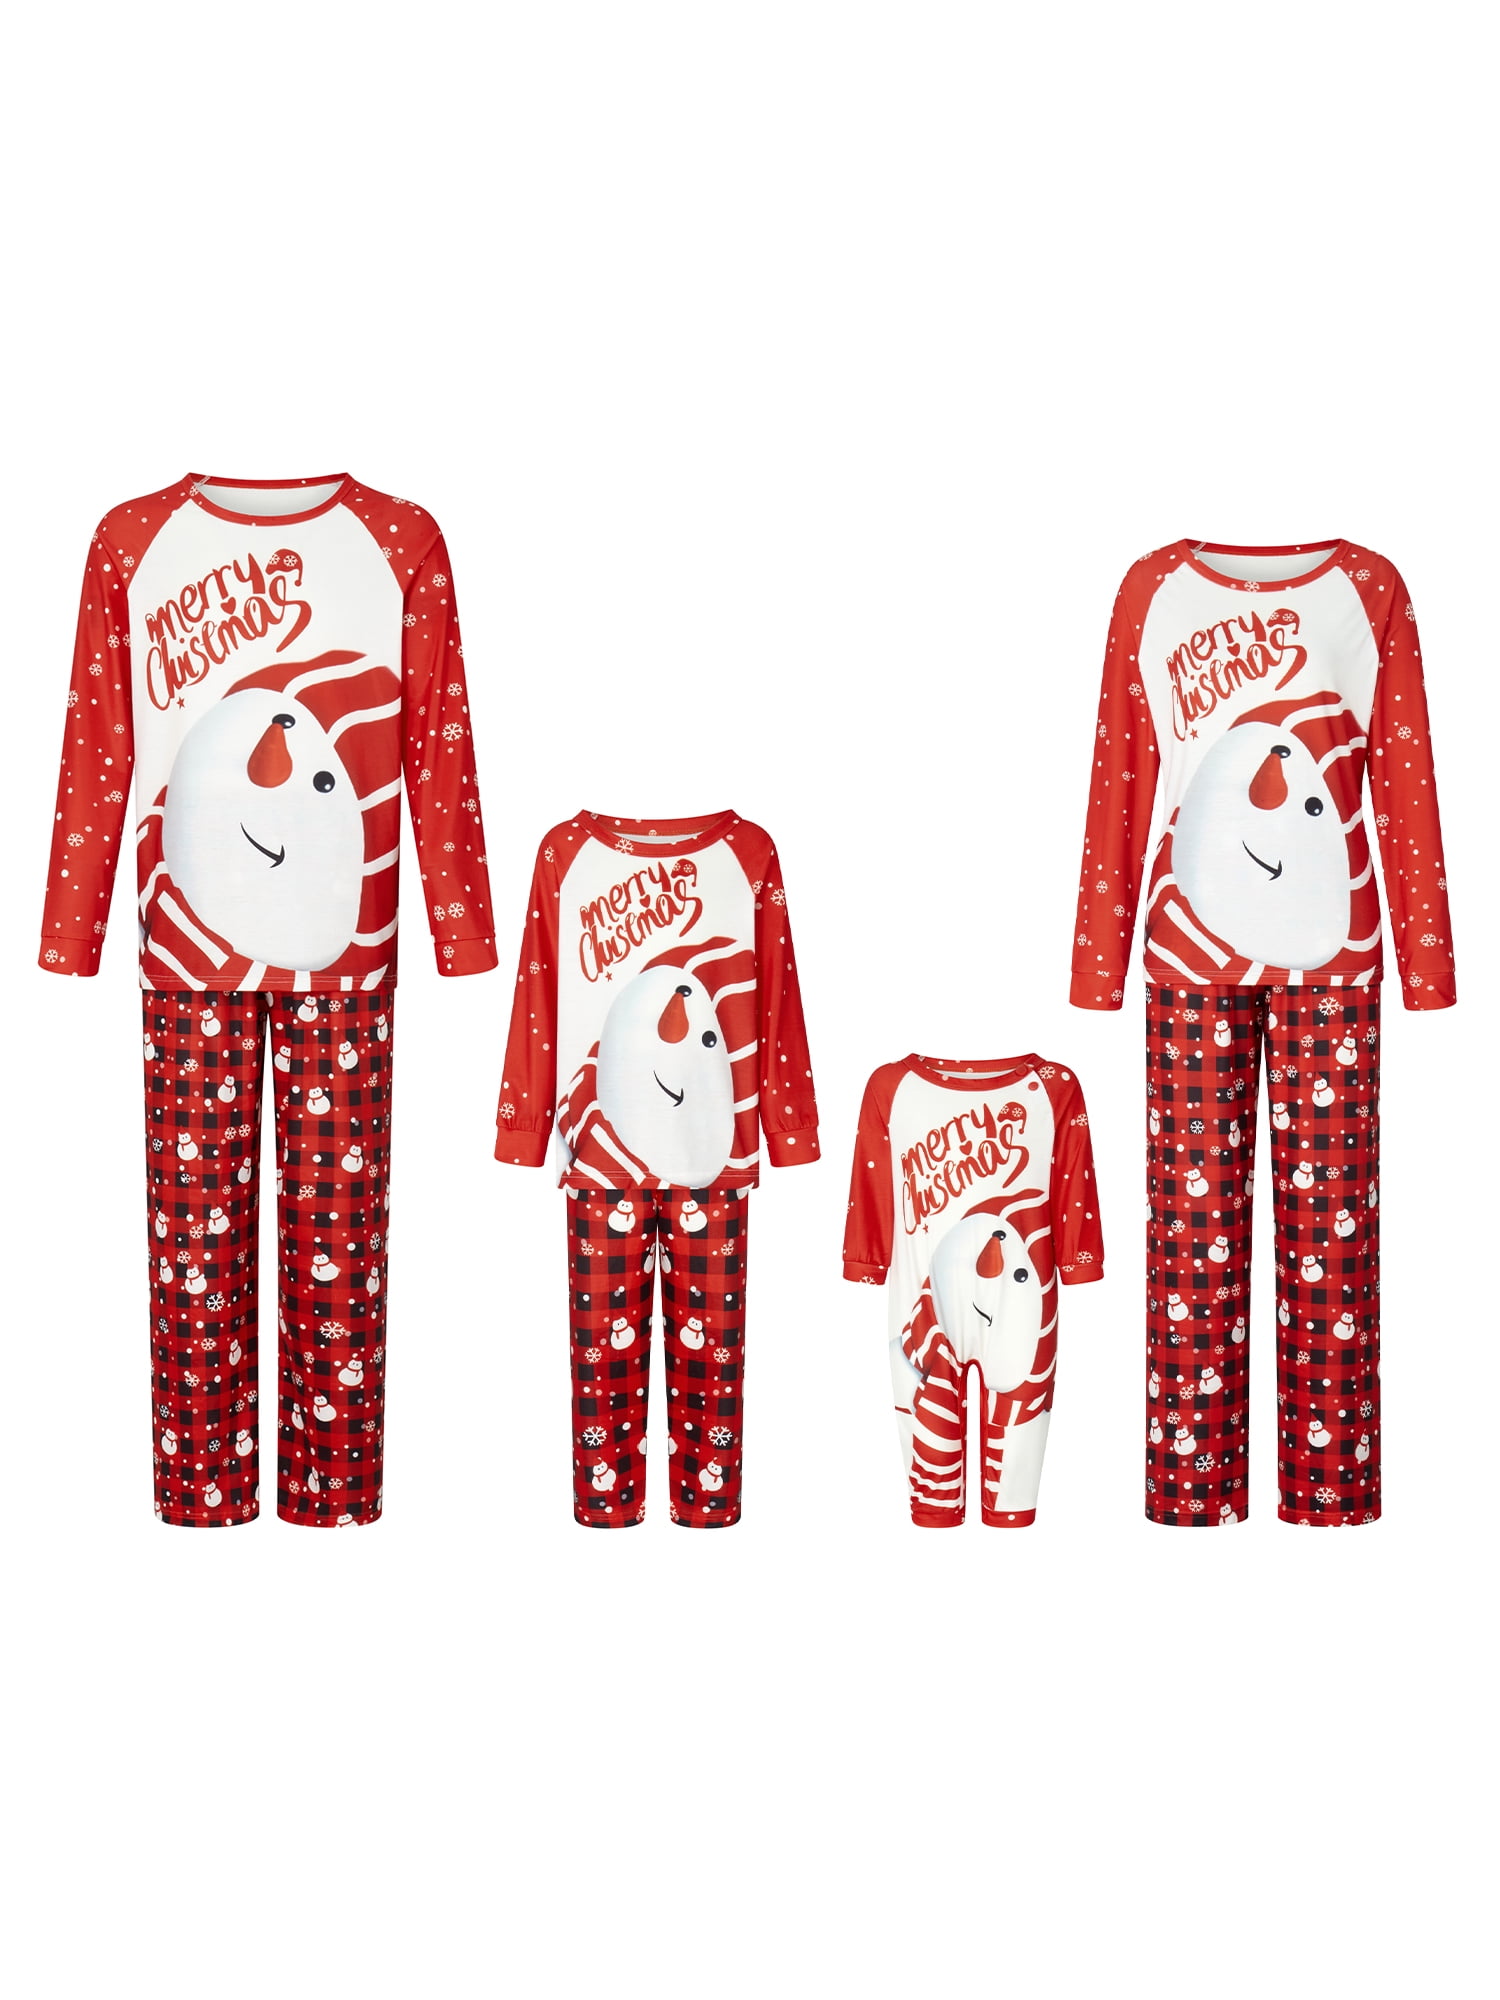 AMILIEe Christmas Family Pajamas Matching Set Snowman Print Shirt Tops ...